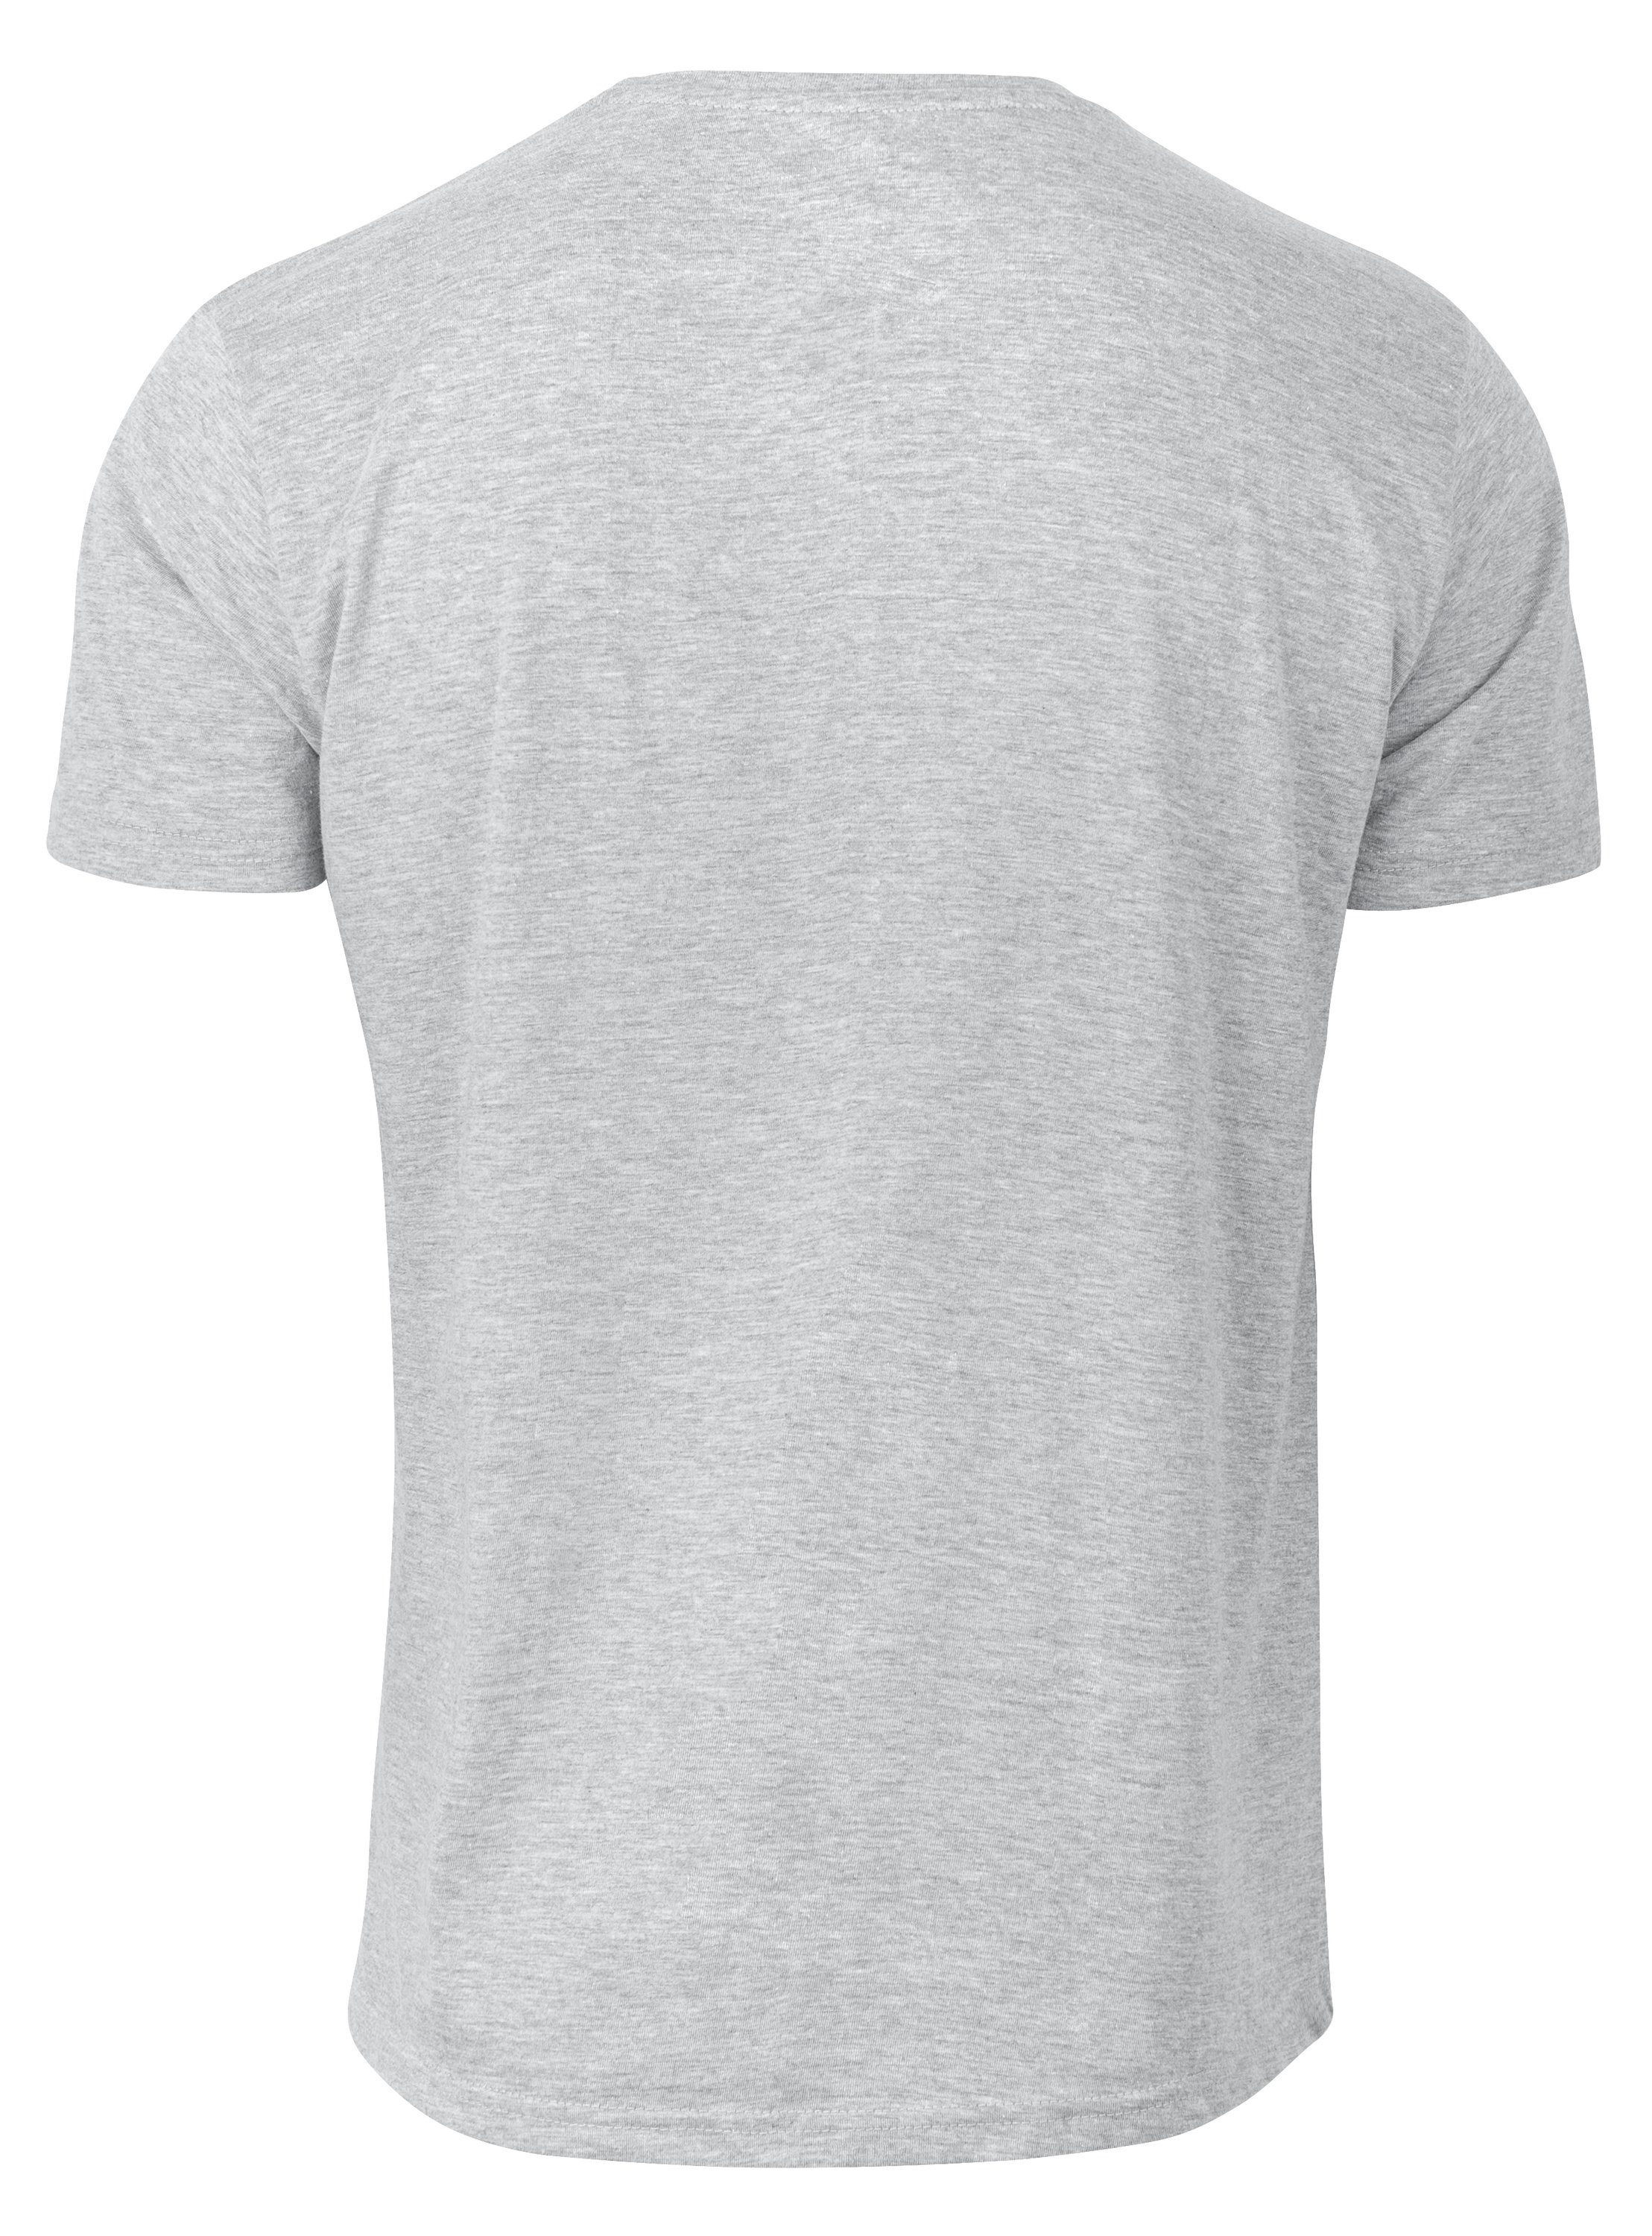 Cotton Prime® T-Shirt - Affenmotiv DJ-Kopfhörer Monkey mit mit grau